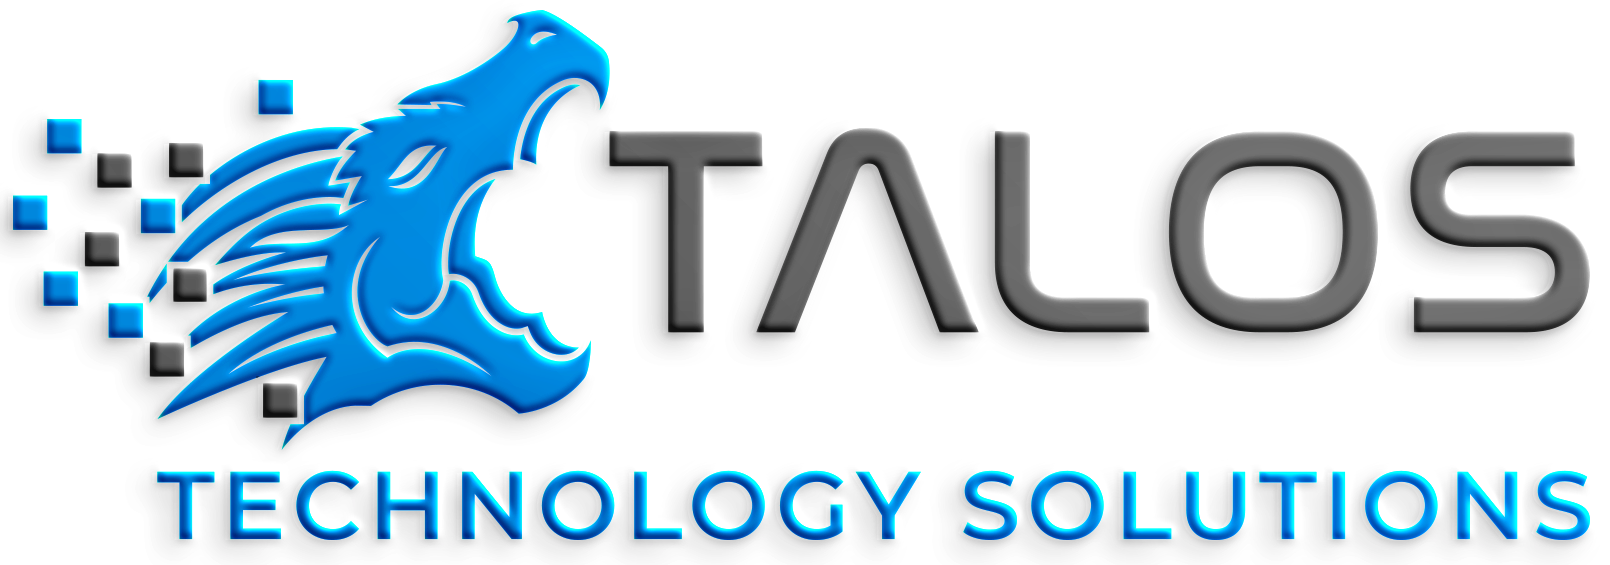 Talos Technology Solutions